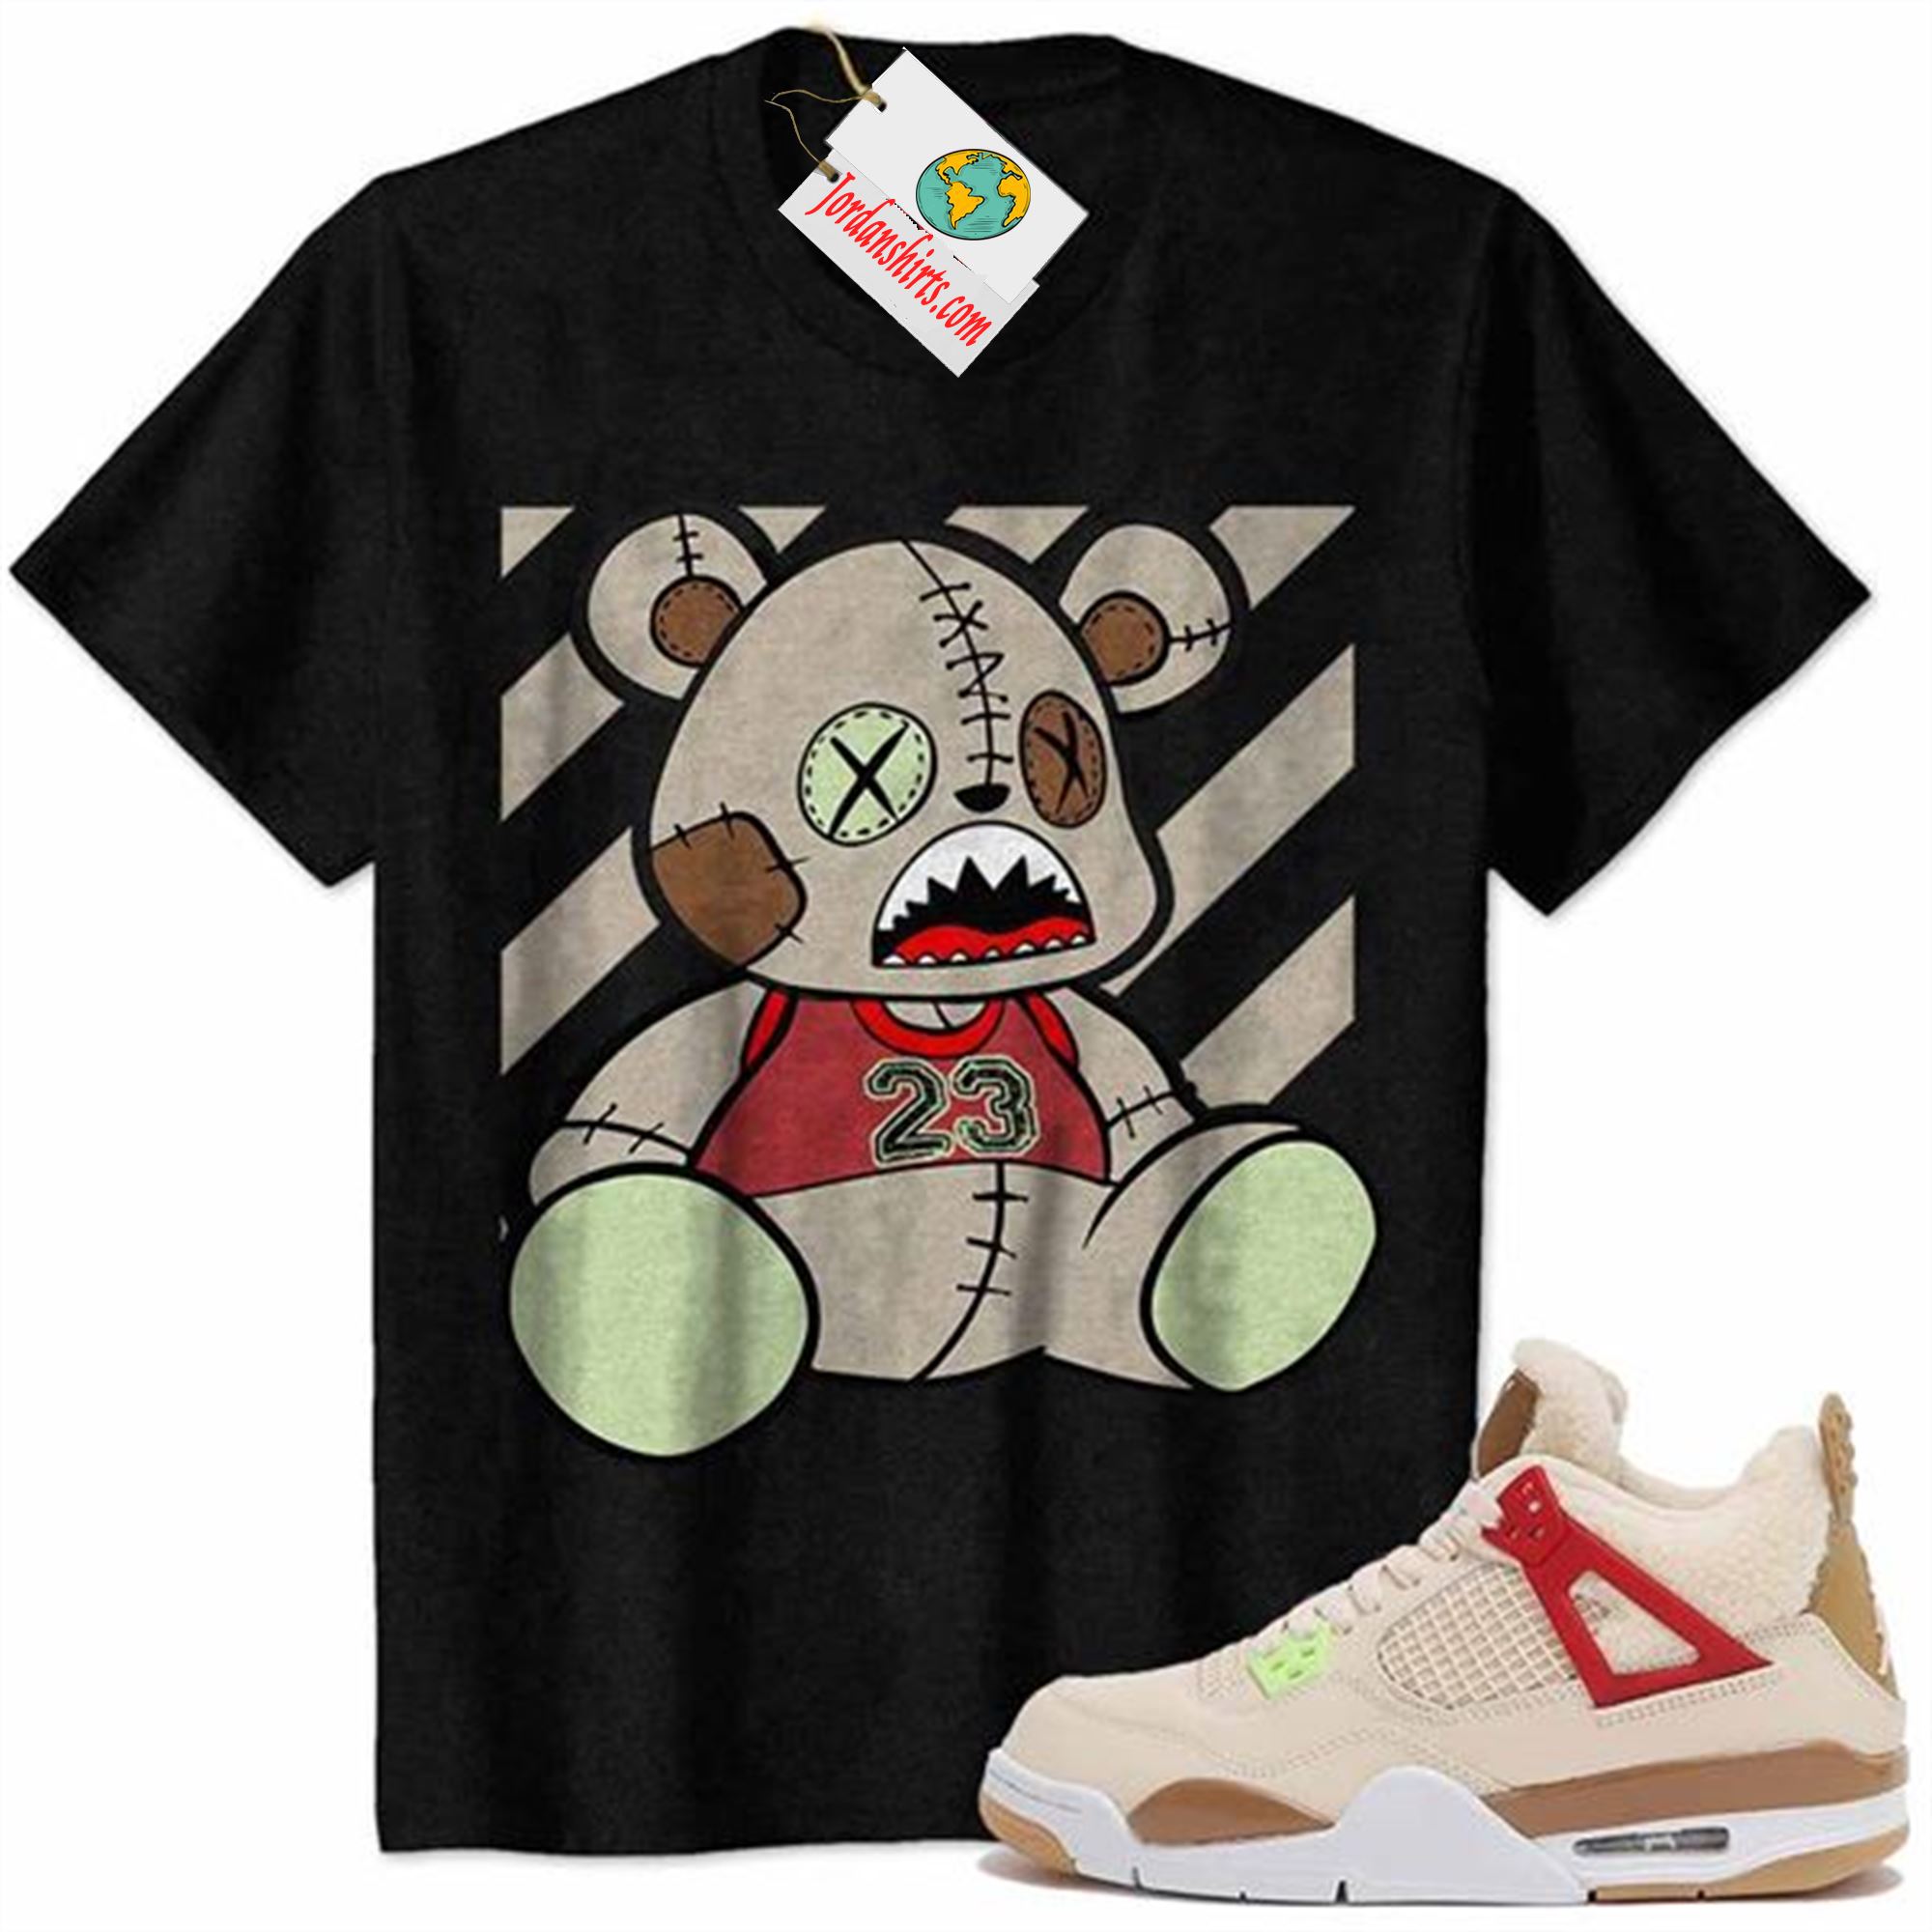 Jordan 4 Shirt, 23 Teddy Black Air Jordan 4 Wild Things 4s Full Size Up To 5xl